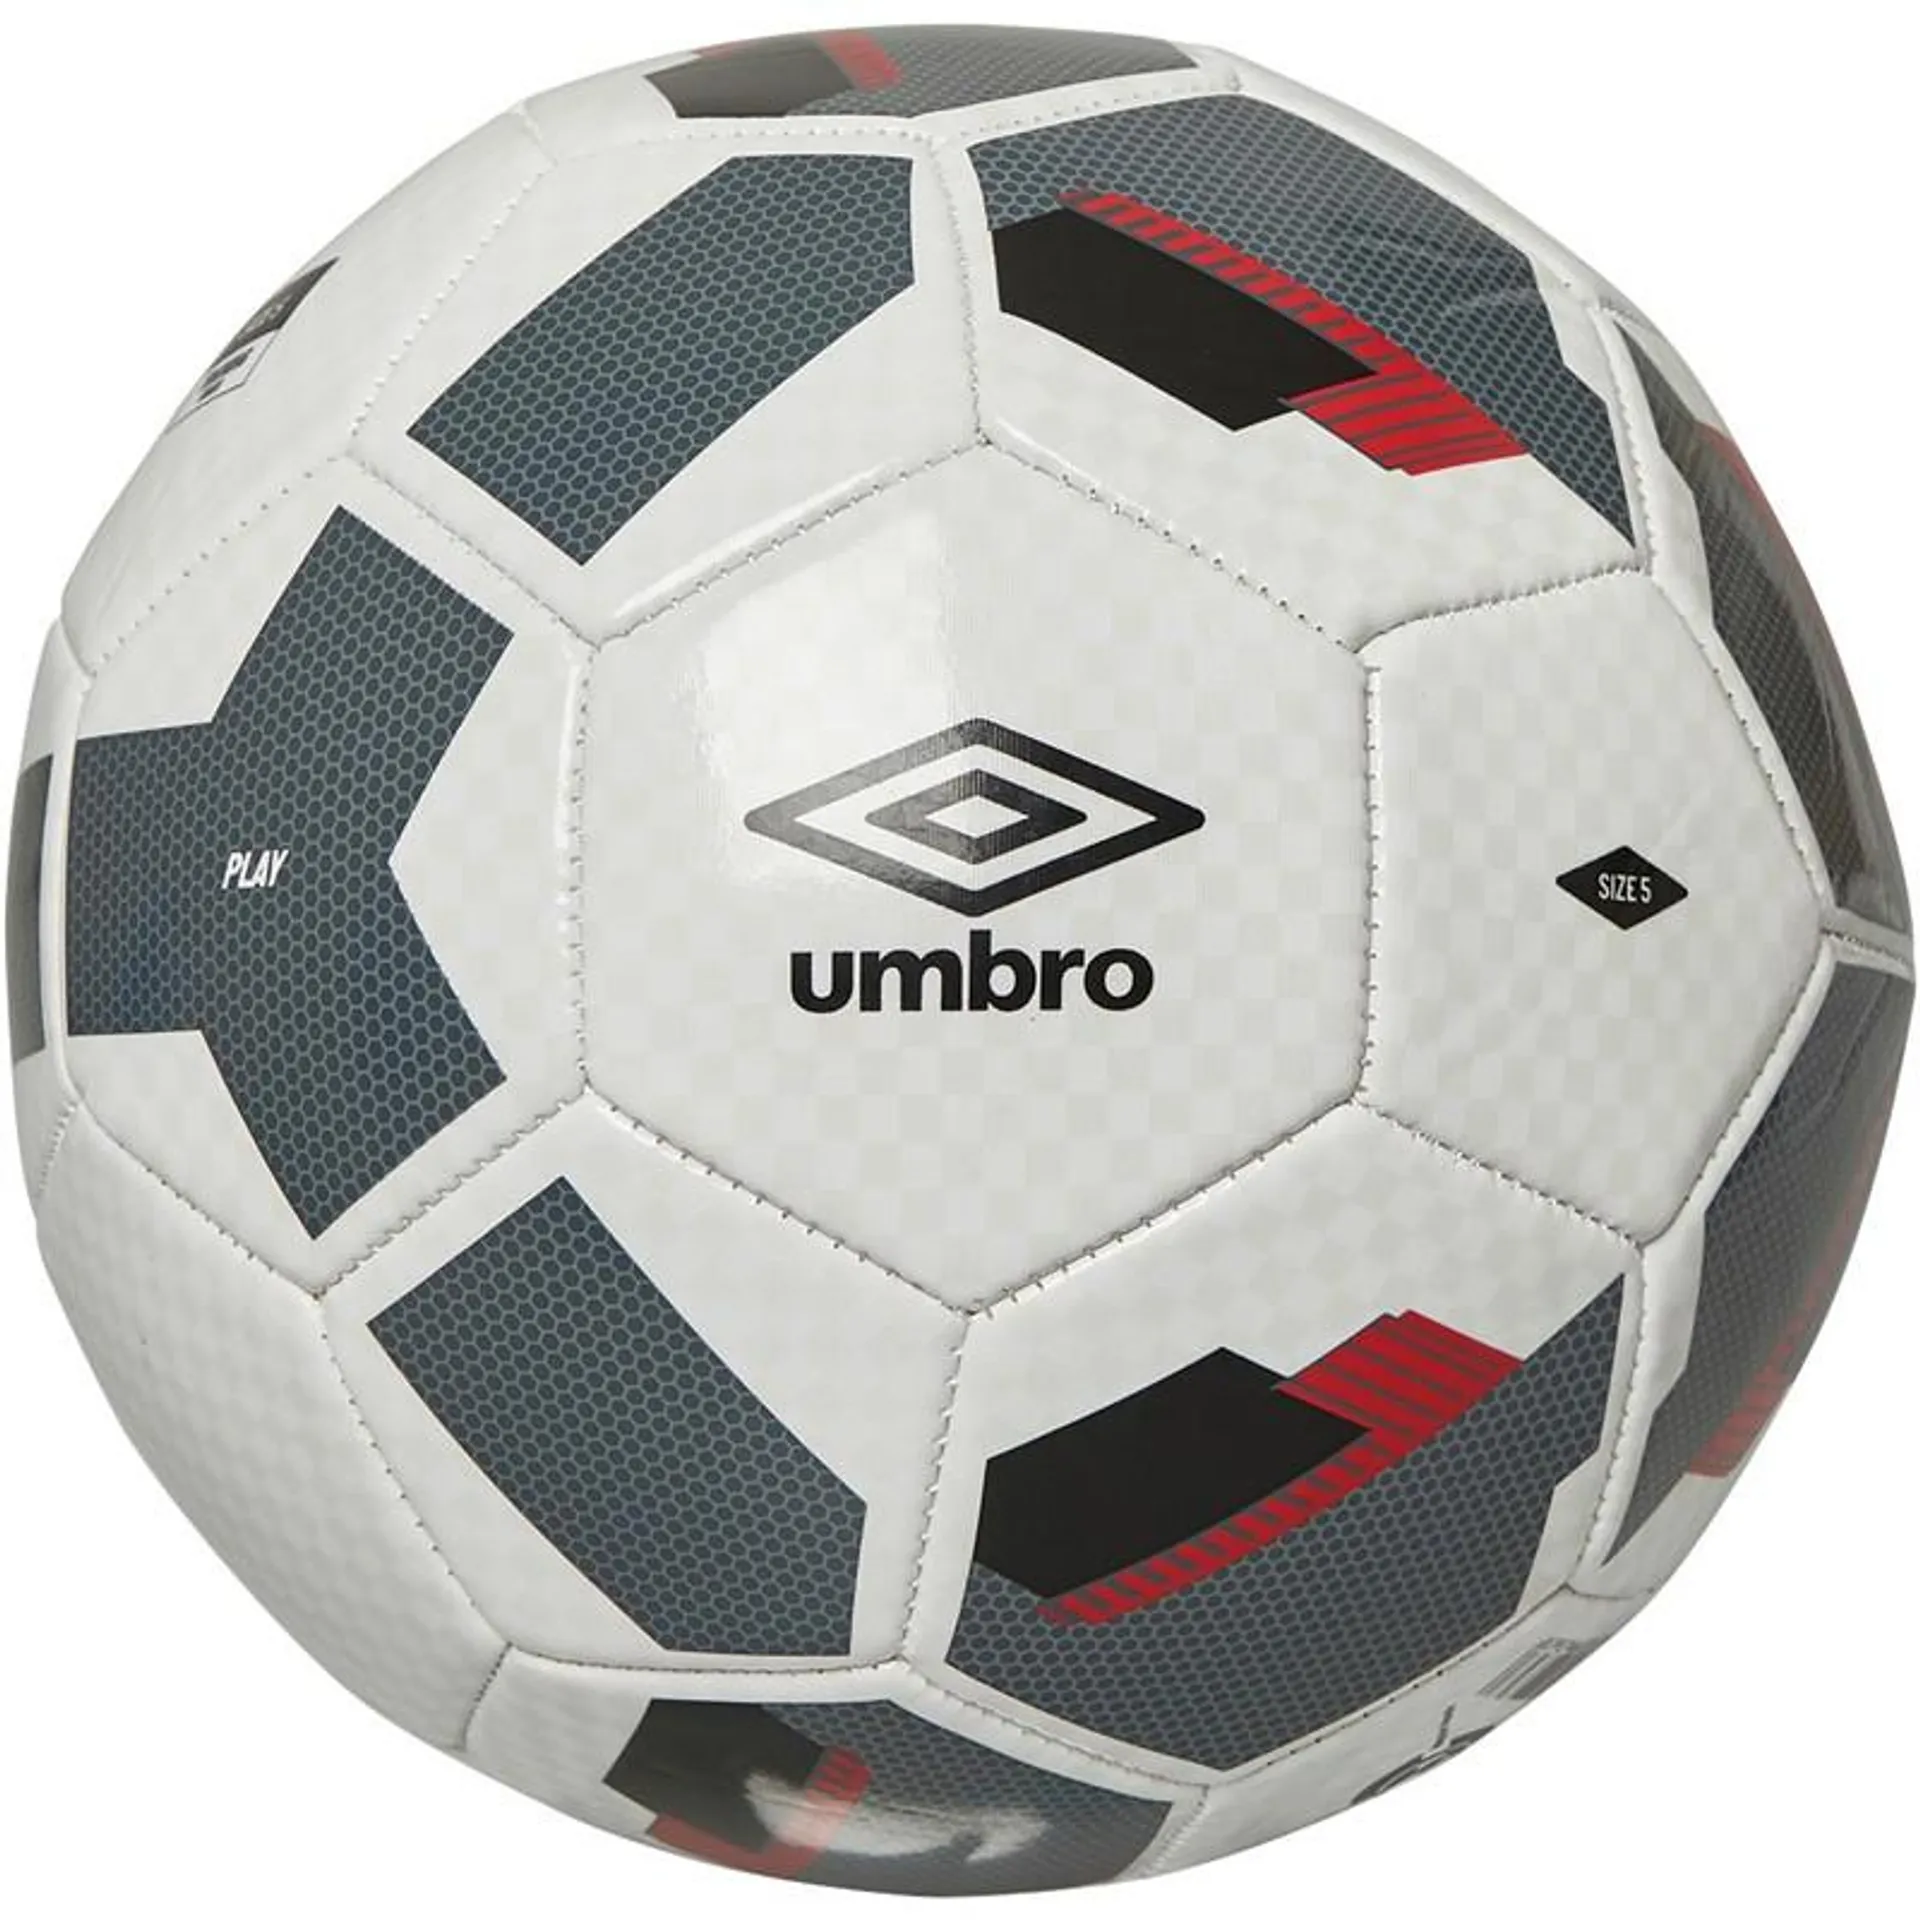 Umbro Play Training Football White/Black/Carbon/Vermillion